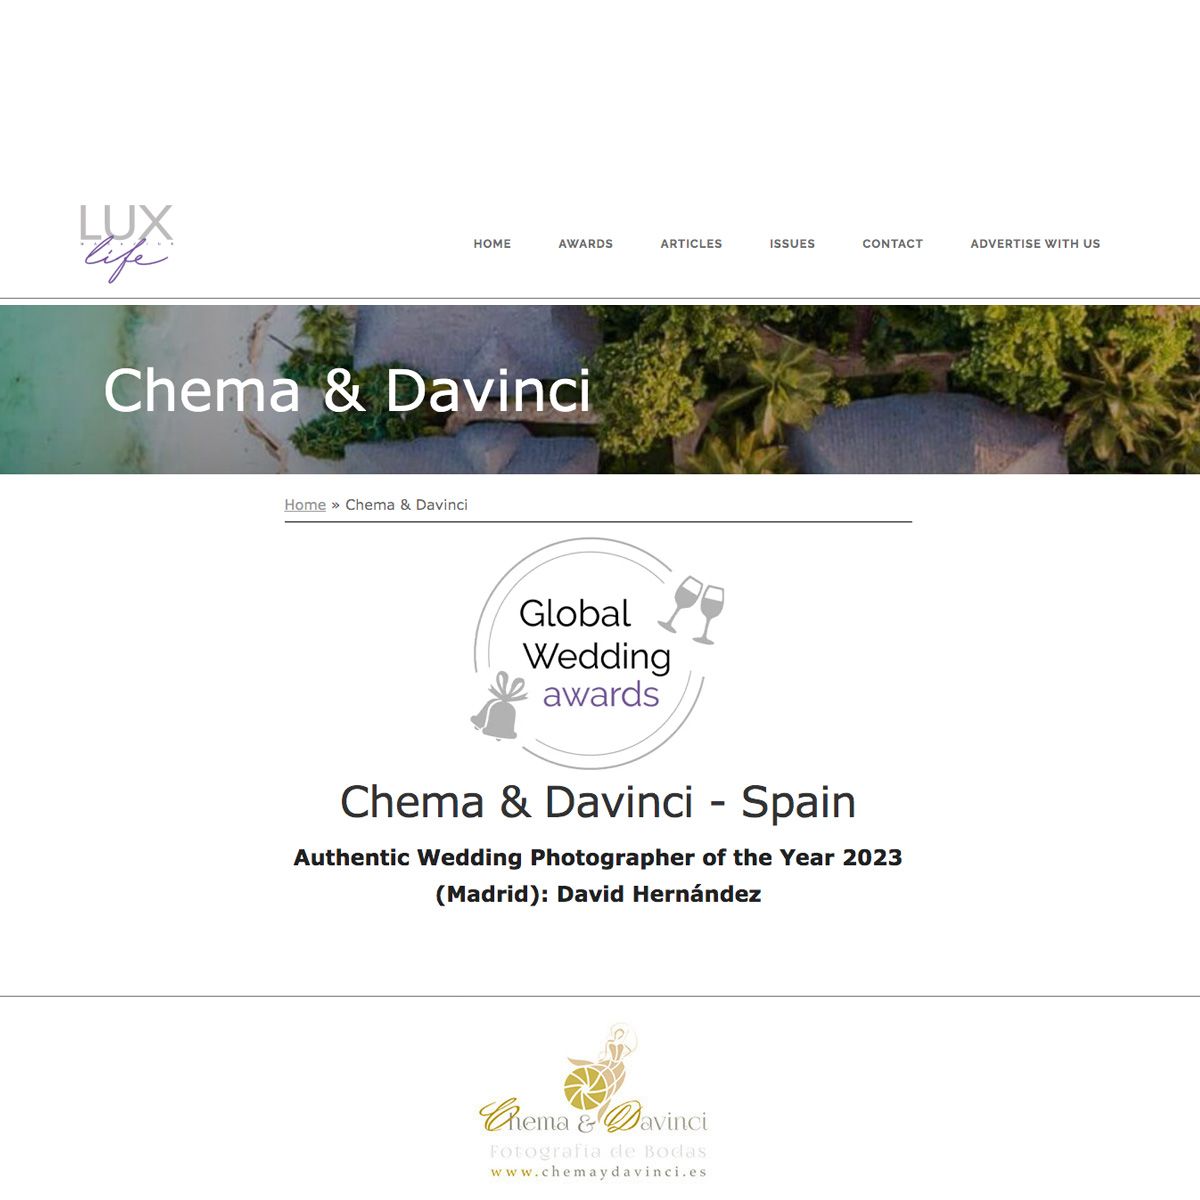 Imagen Chema & Davinci premiado como Authentic Wedding Photographer of the Year 2023 (Madrid ) en los 2023 Global Wedding Awards